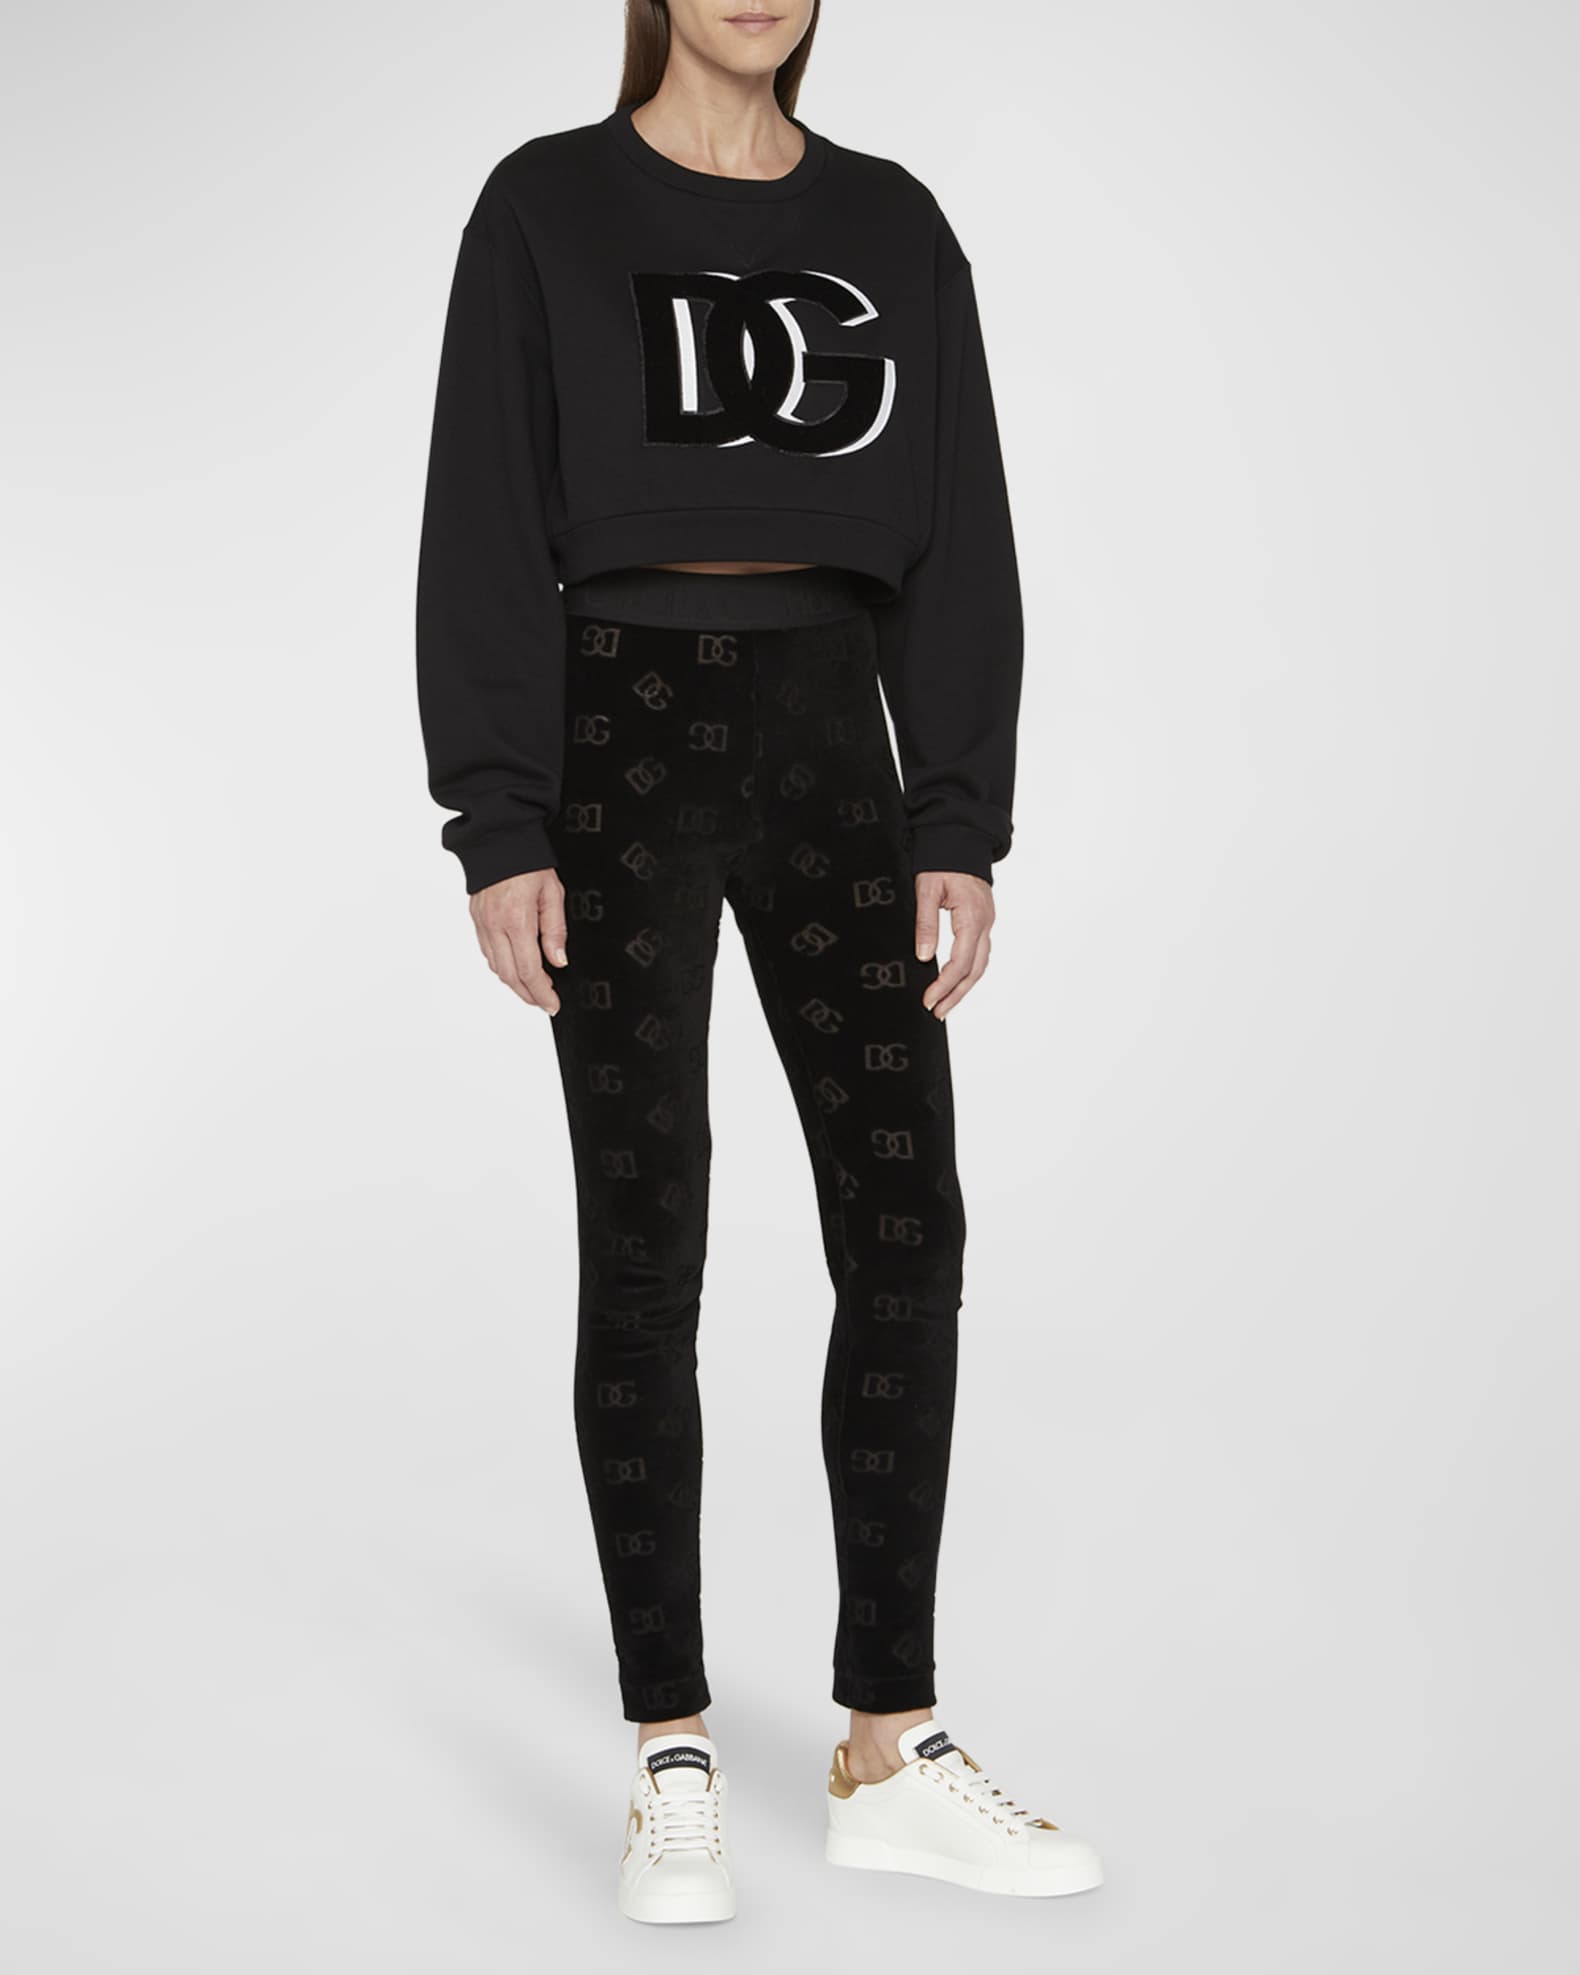 Dolce & Gabbana Monogram Patch Sweater